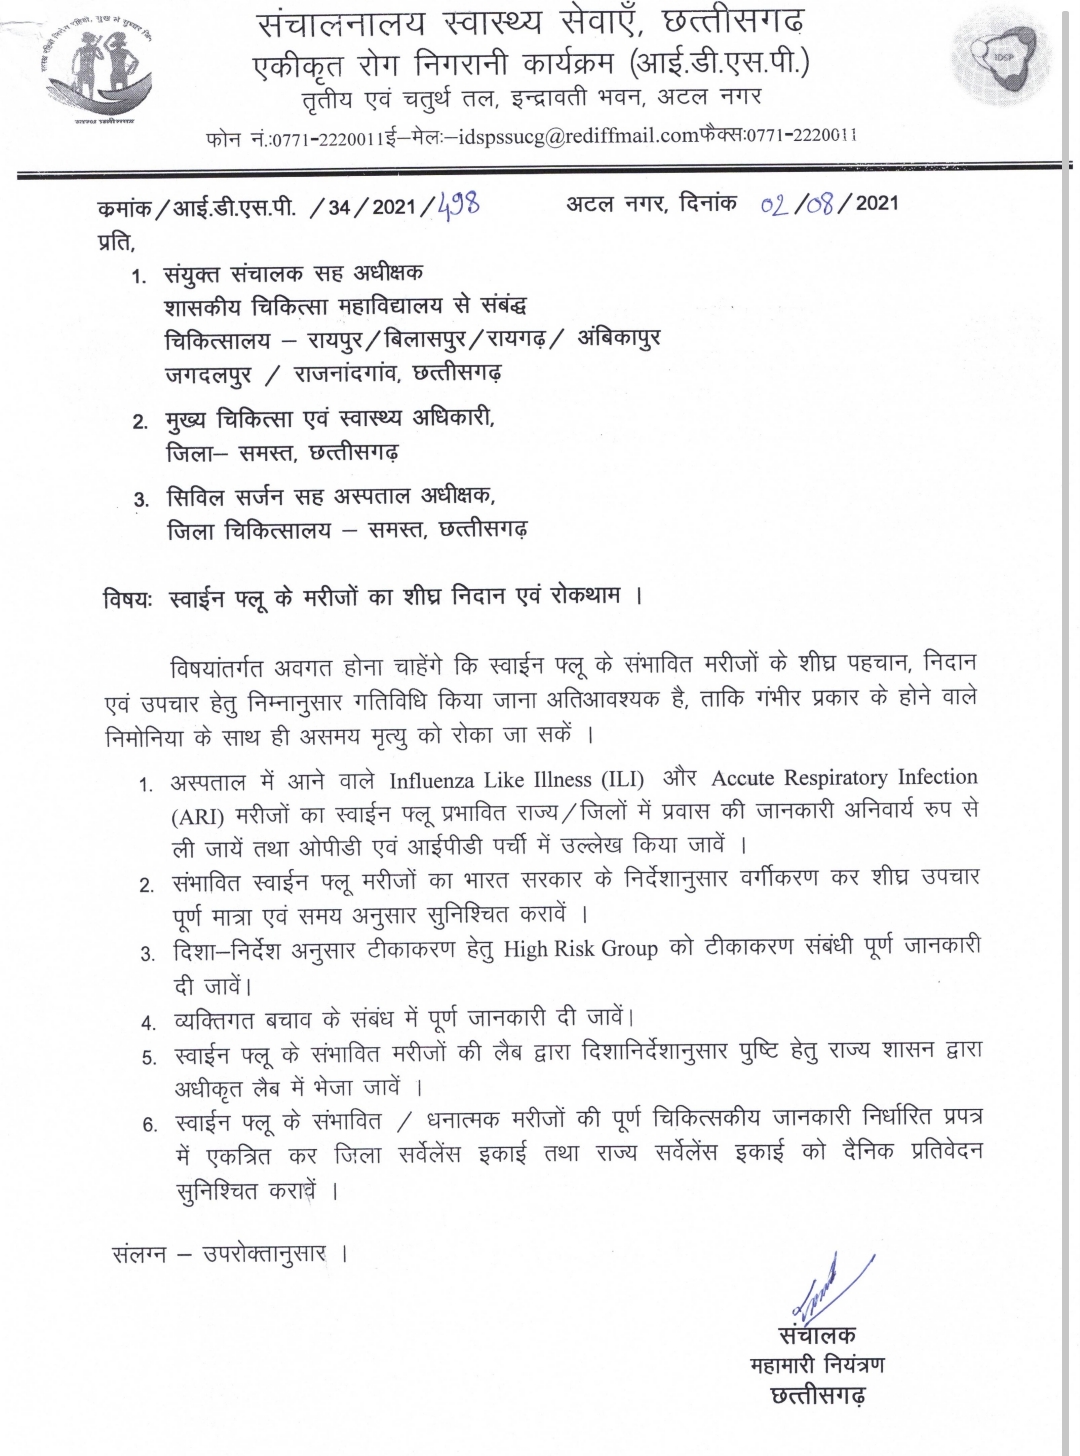 Chhattisgarh Health Department alert